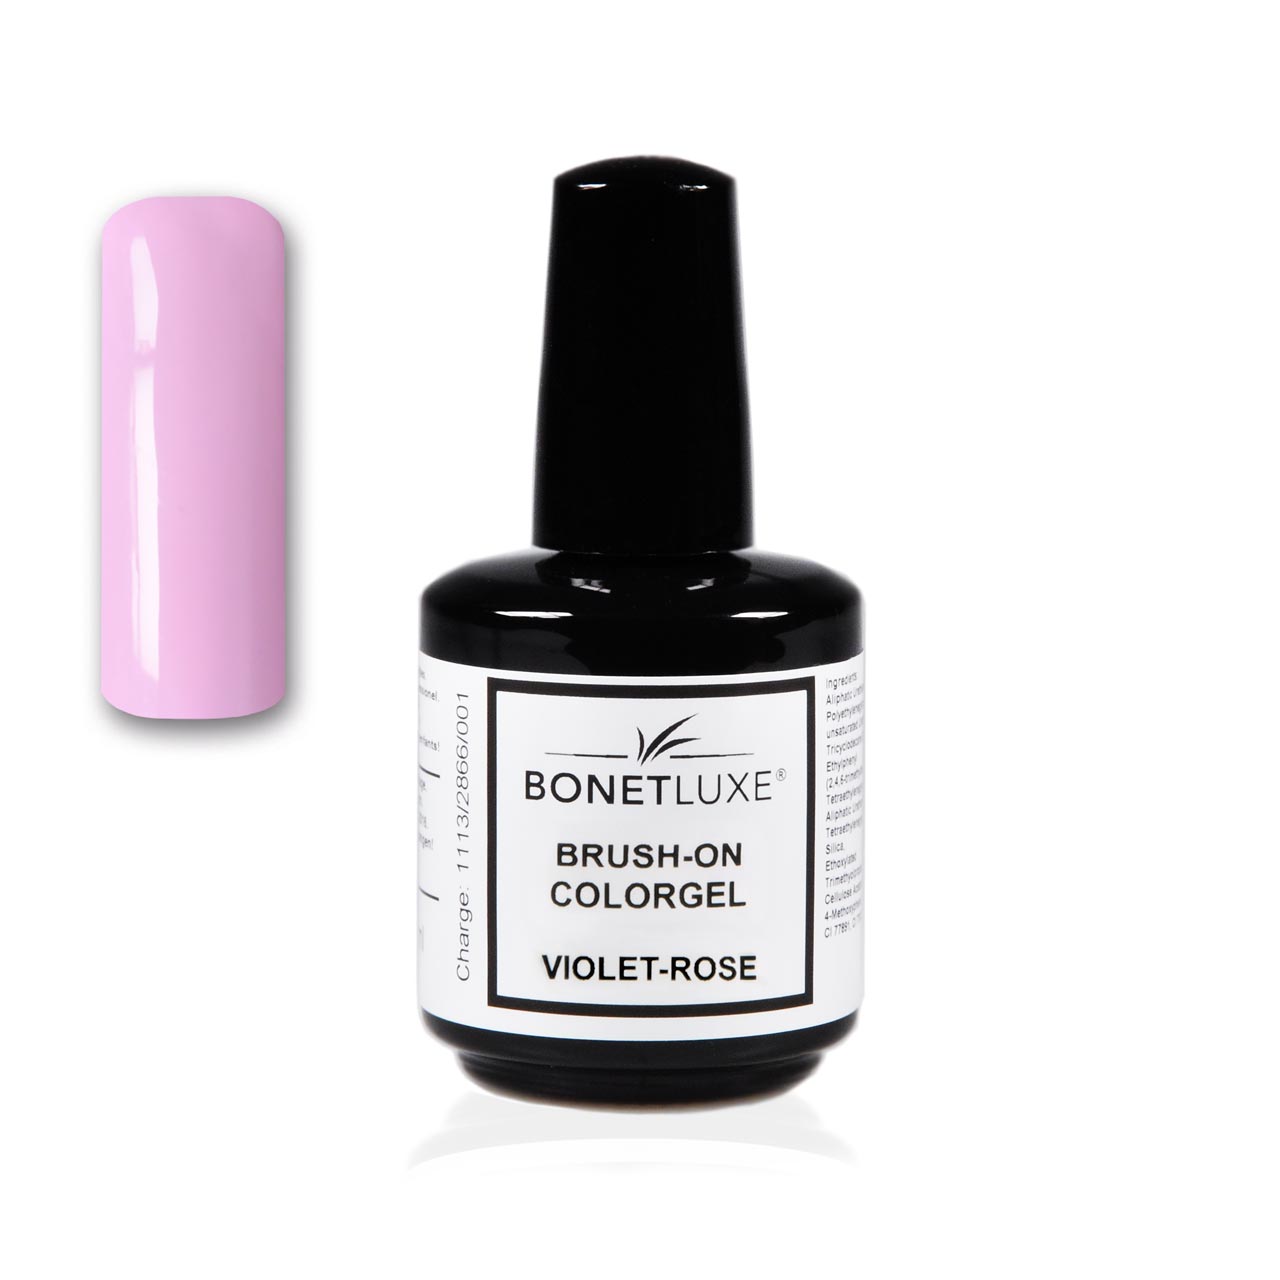 Bonetluxe Brush-On Colorgel Violet-Rose